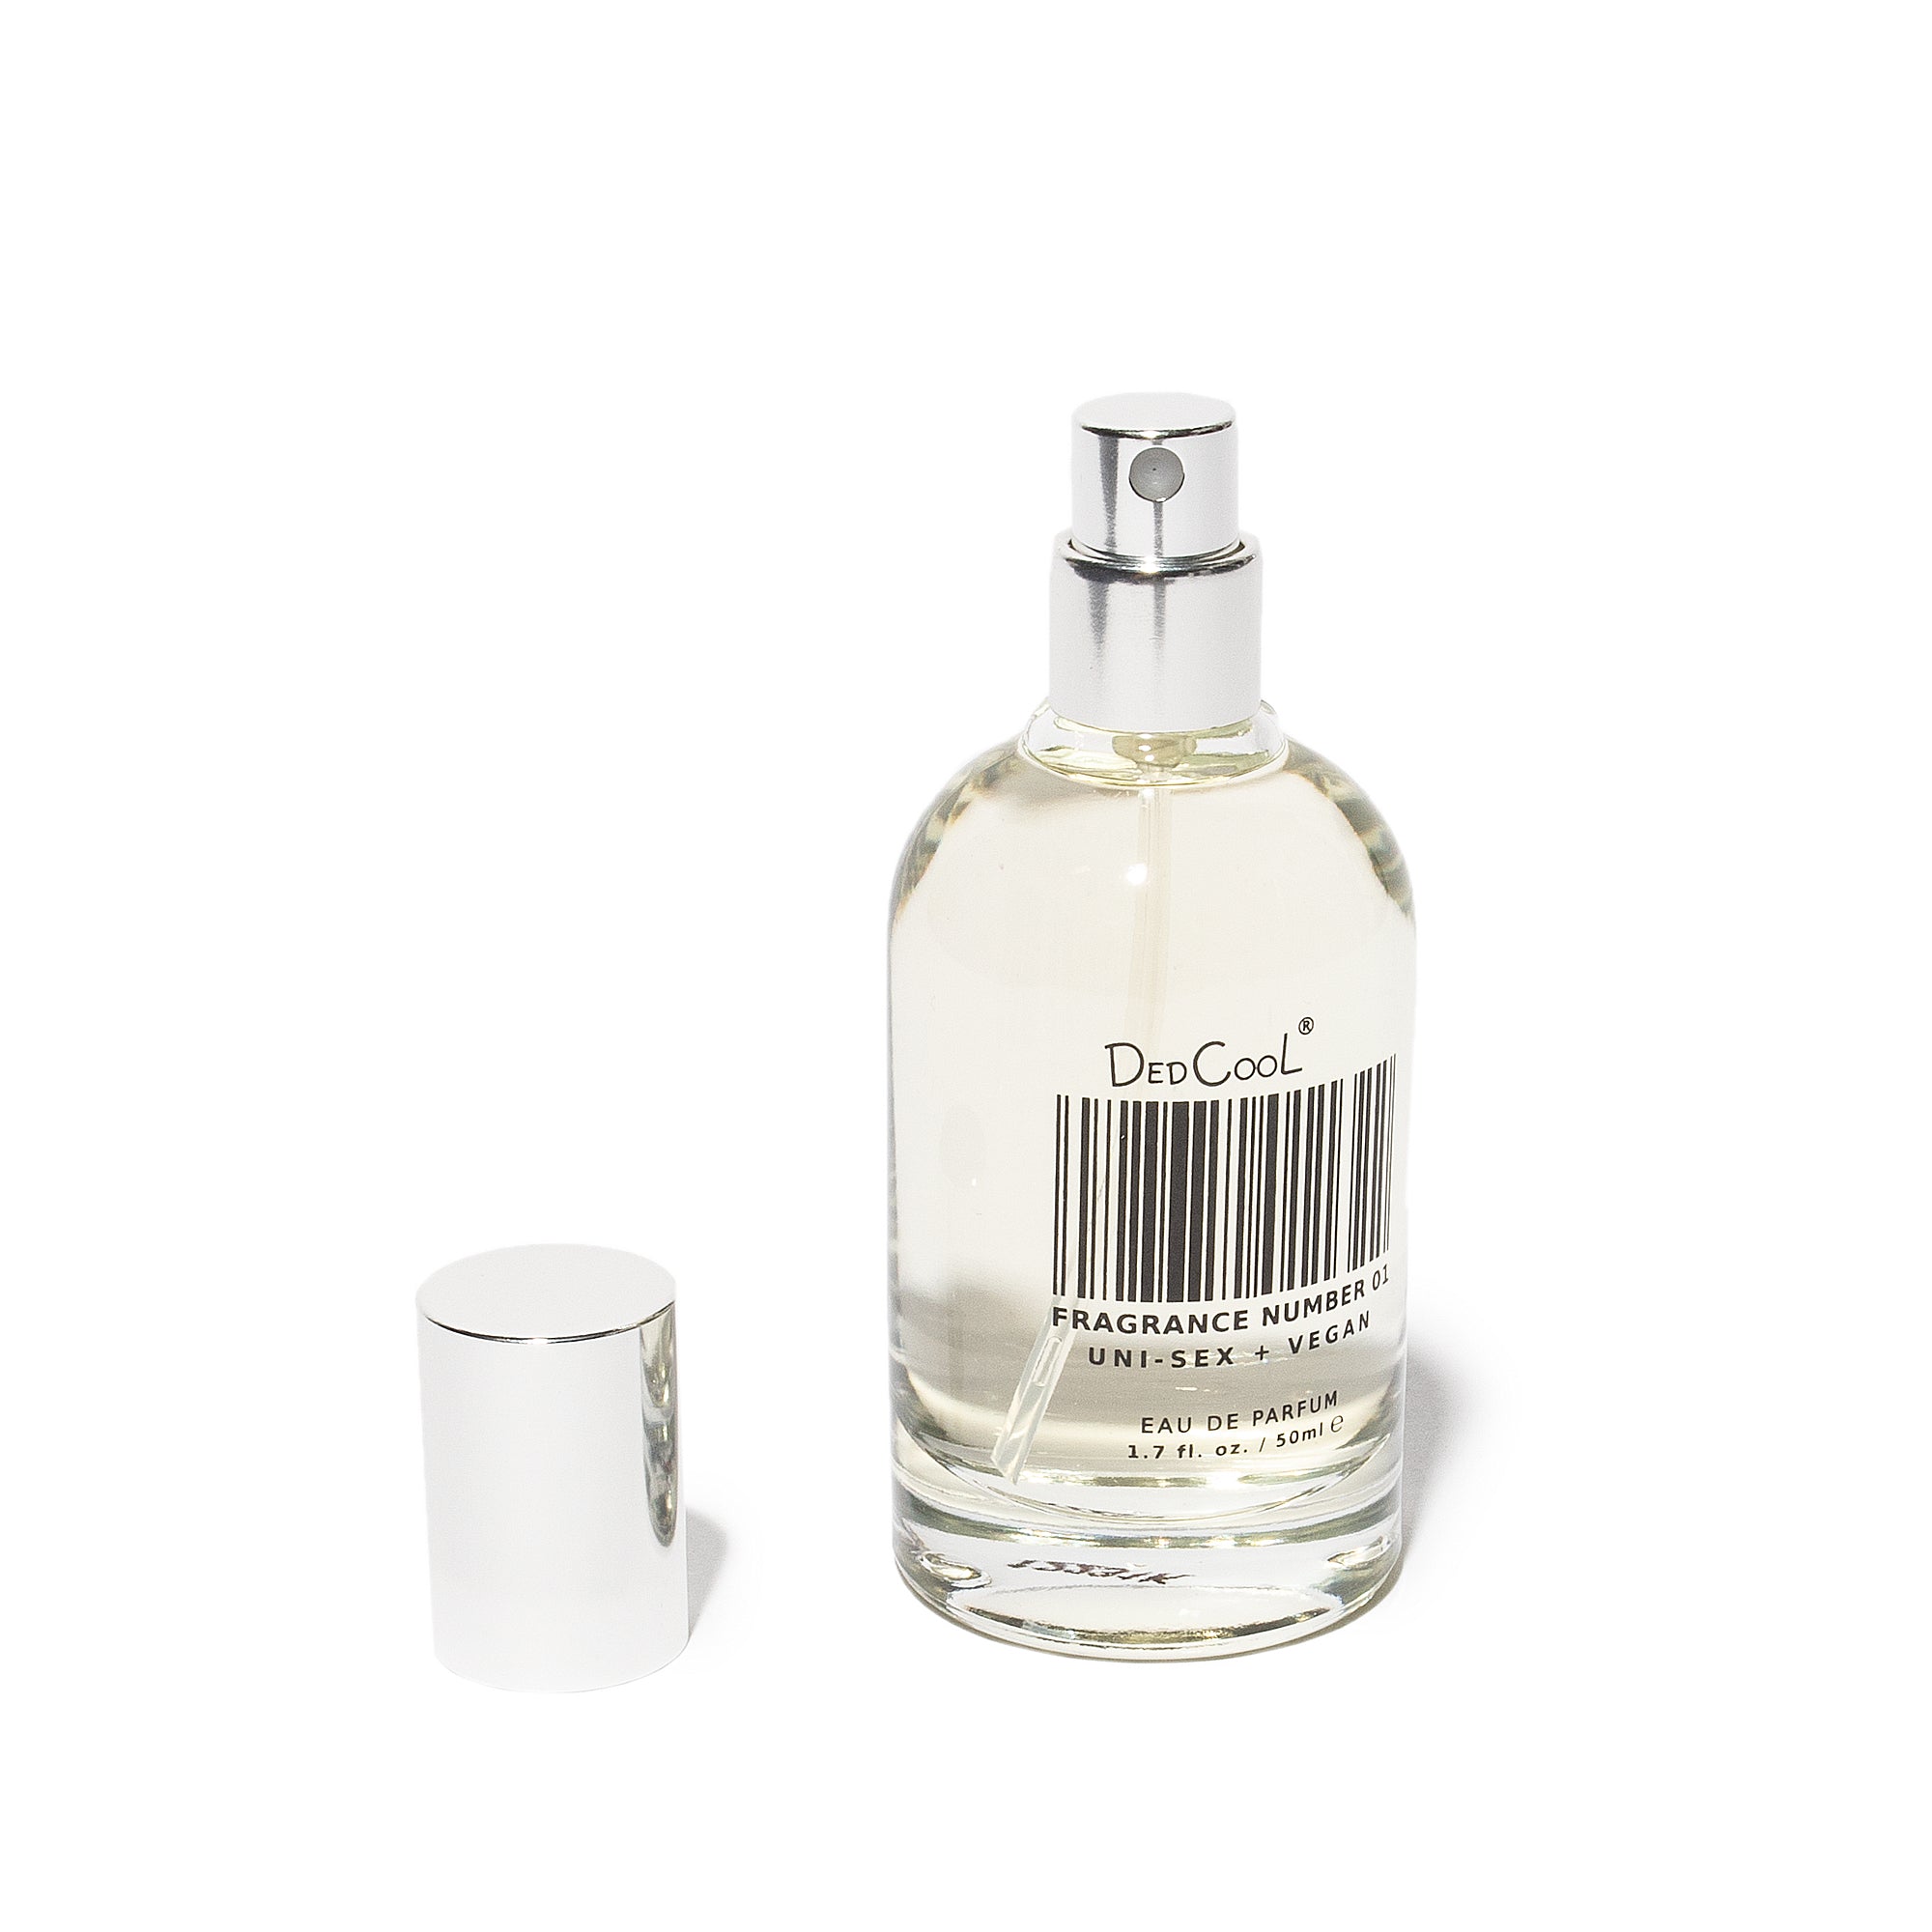 Dedcool Fragrance 01 Taunt